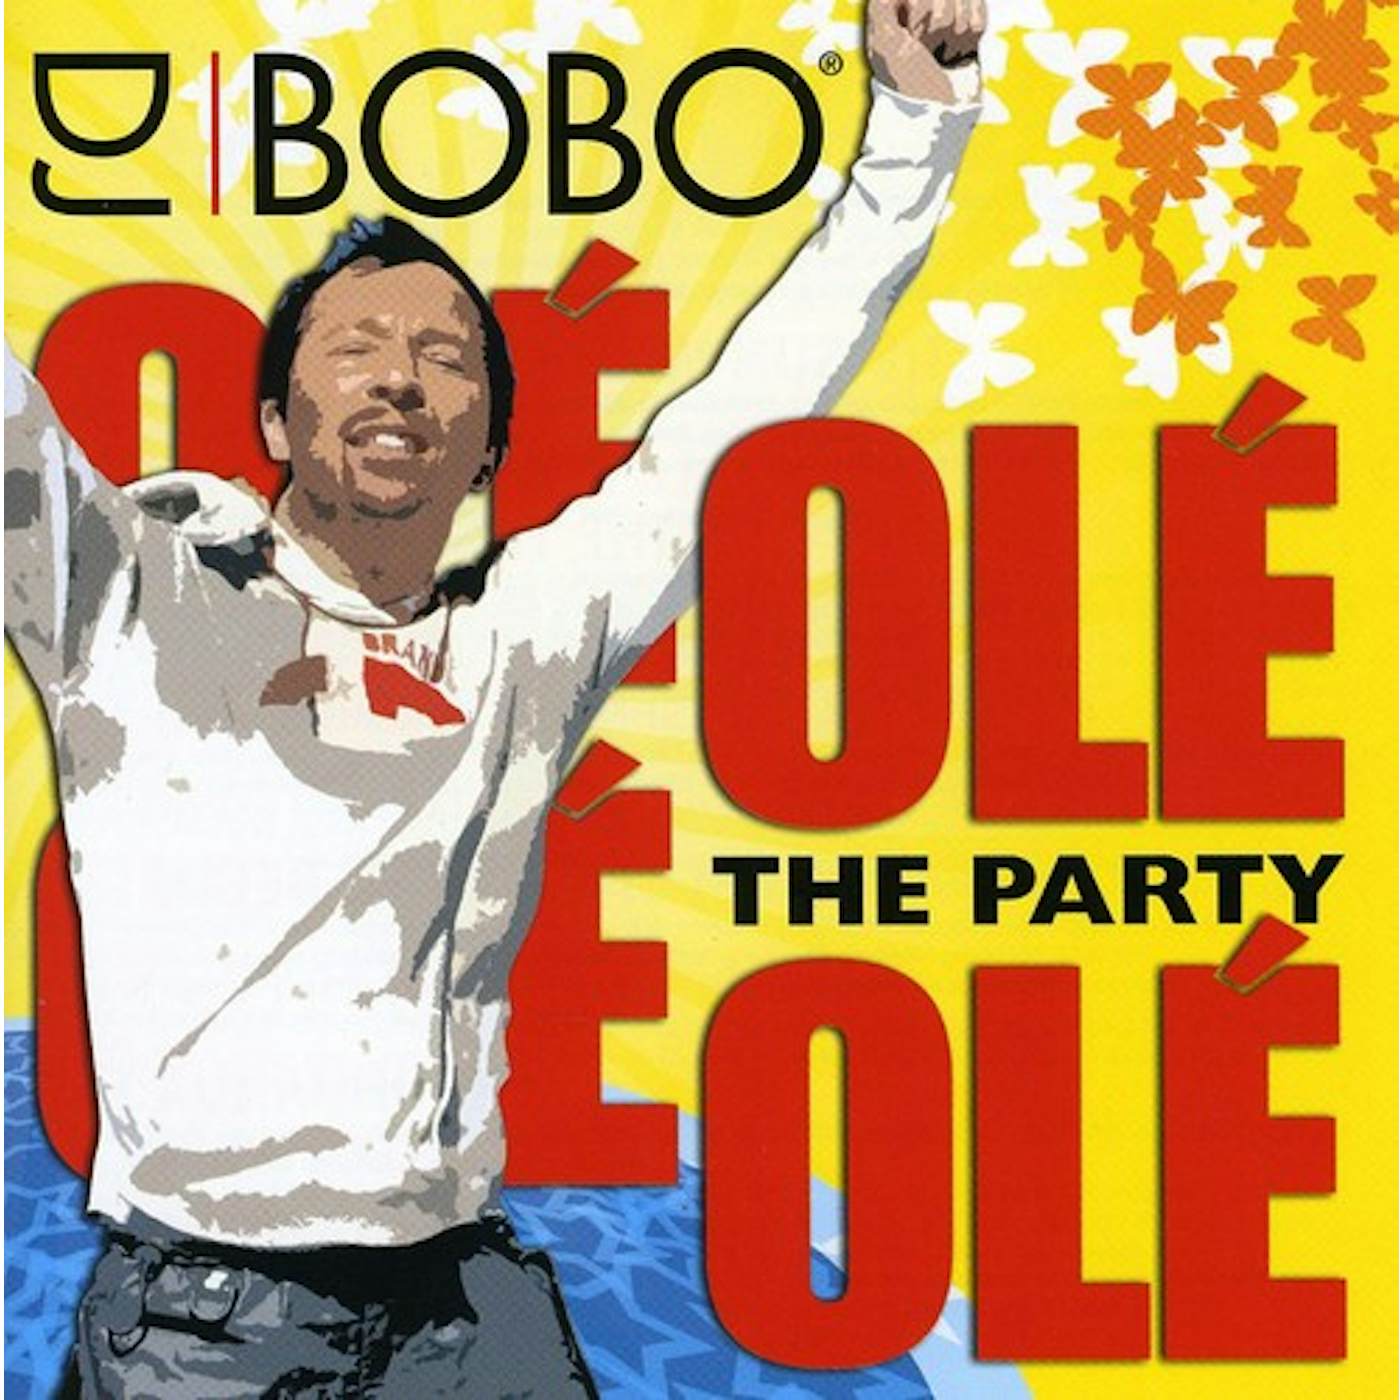 DJ BoBo OLE OLE-THE PARTY CD